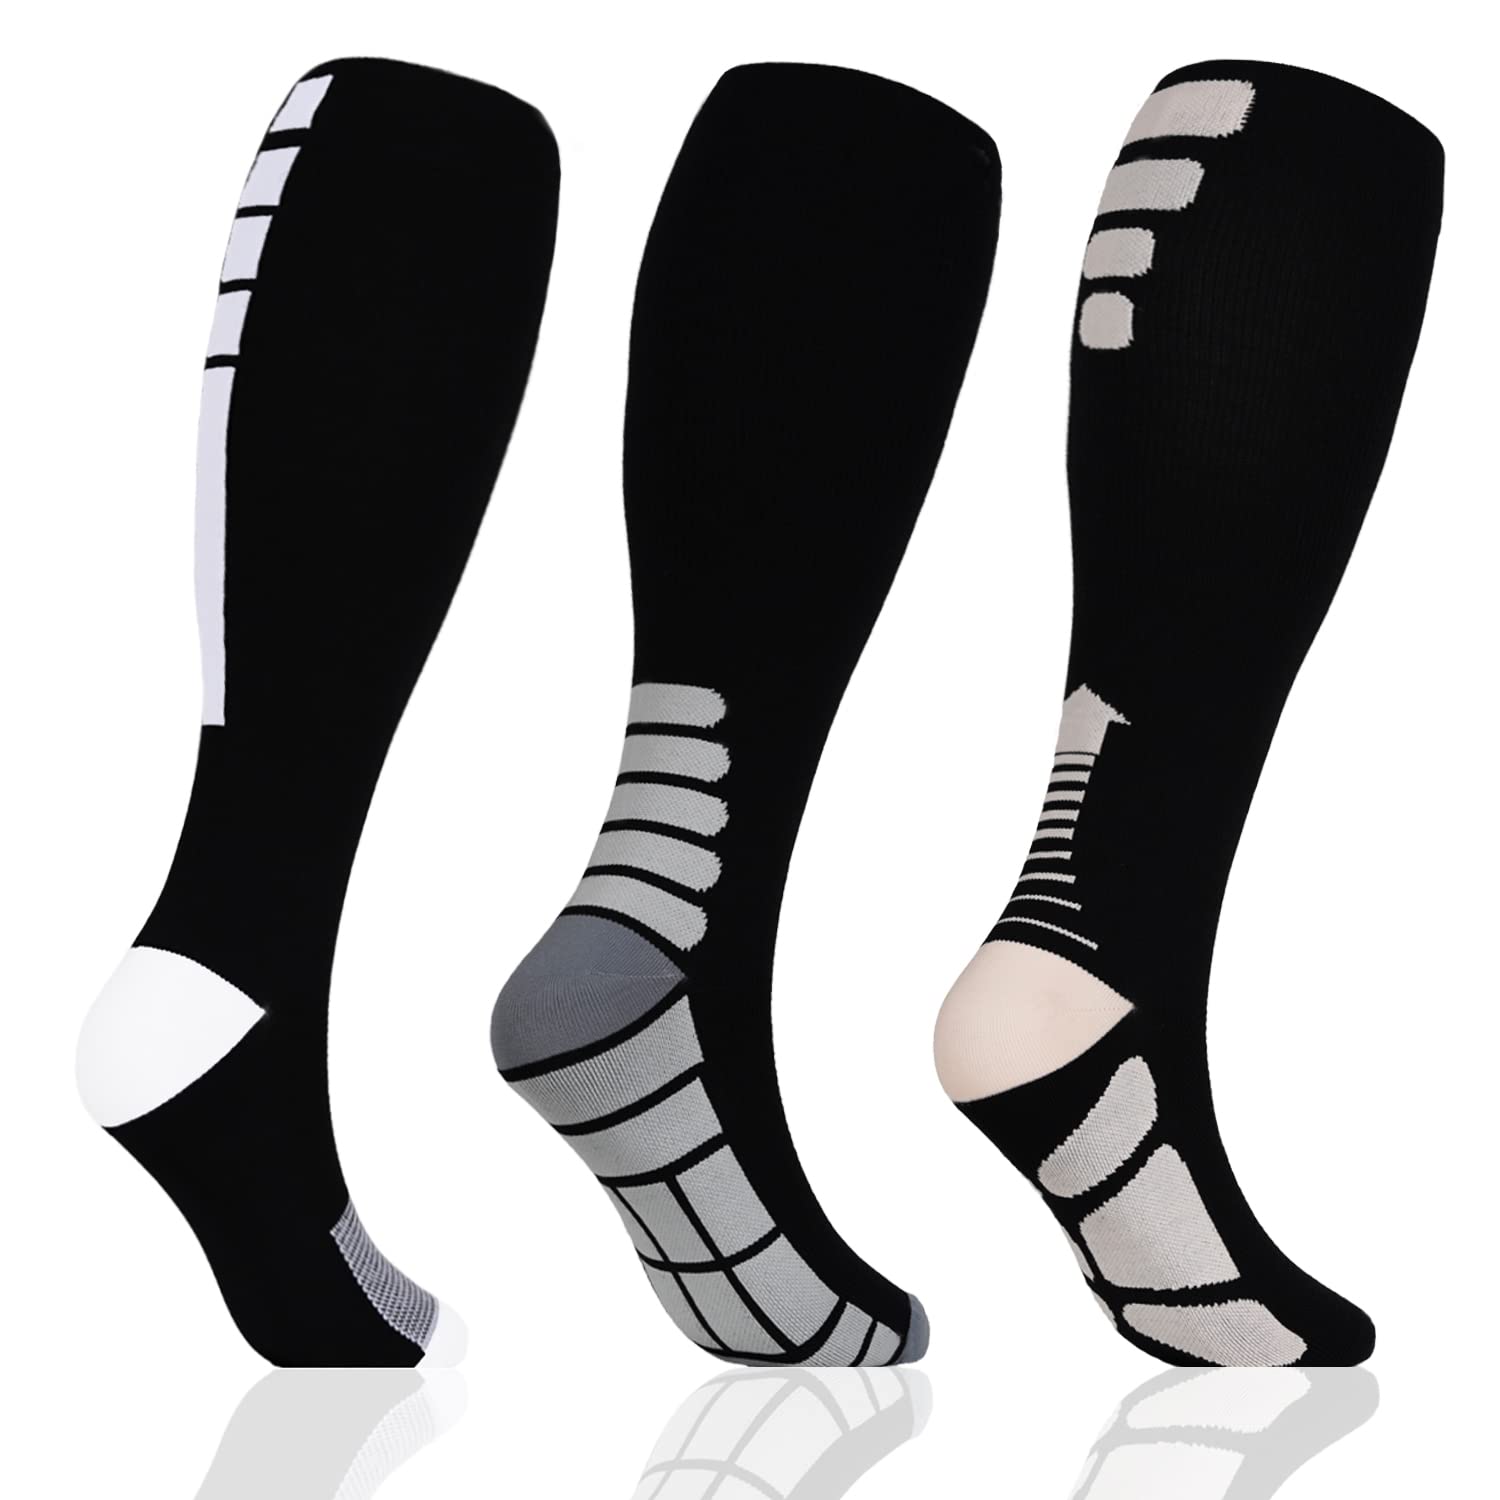 3 Pairs Plus size compression socks wide calf women men knee high